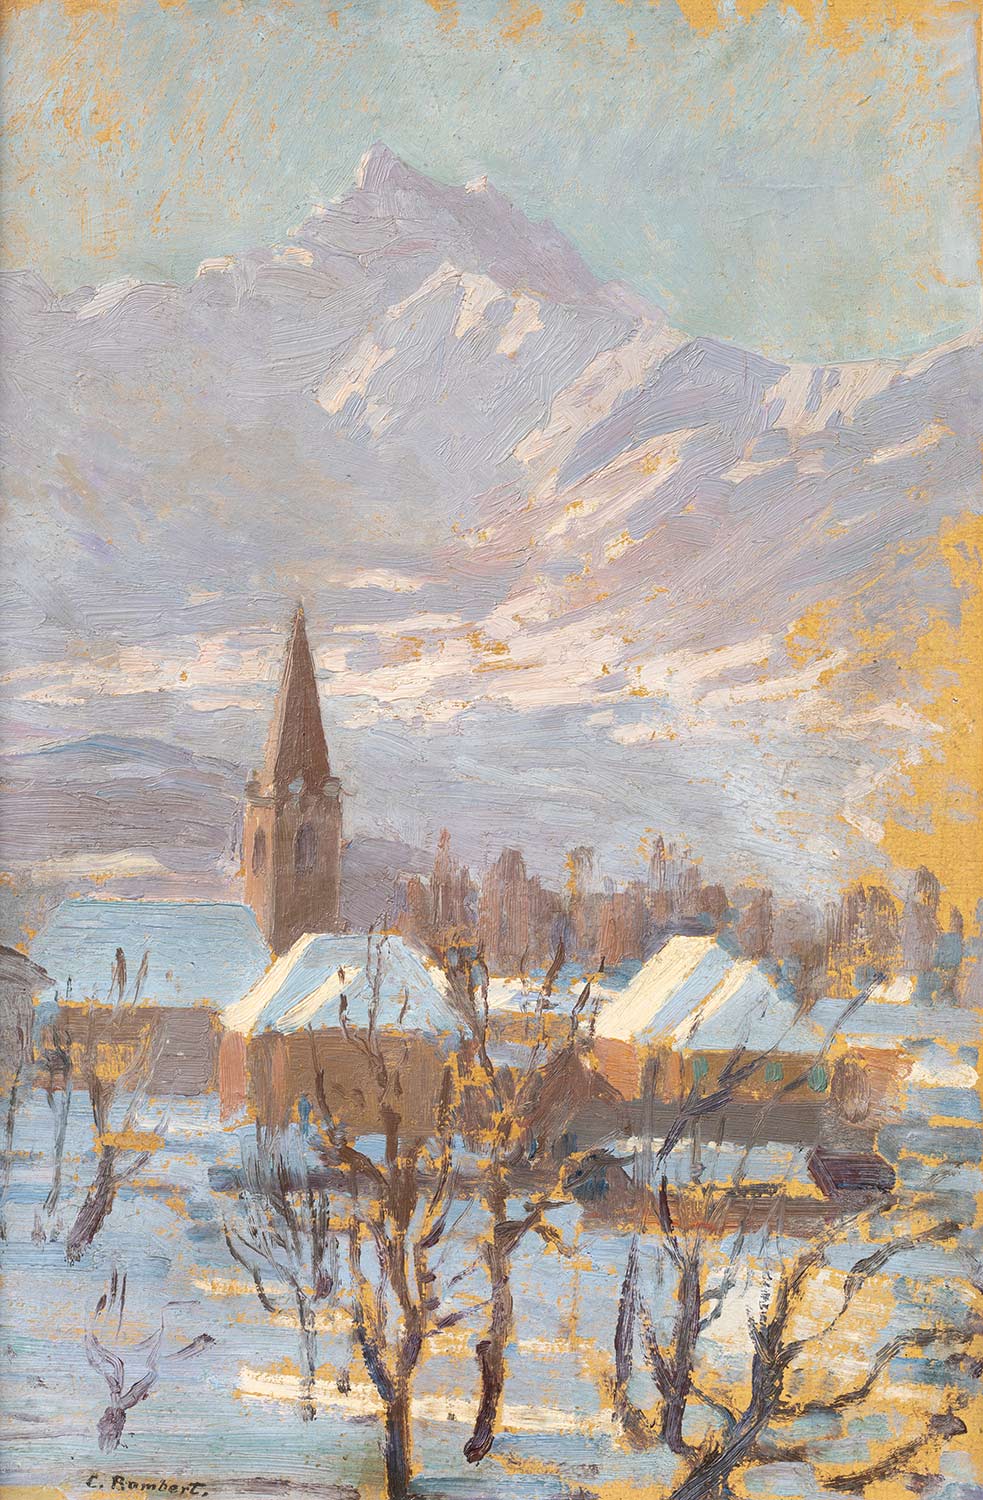 Charles Rambert (1867 - 1932), huile sur toile 45 x 30cm, vers 1930. Galerie de la Tine, Troistorrents